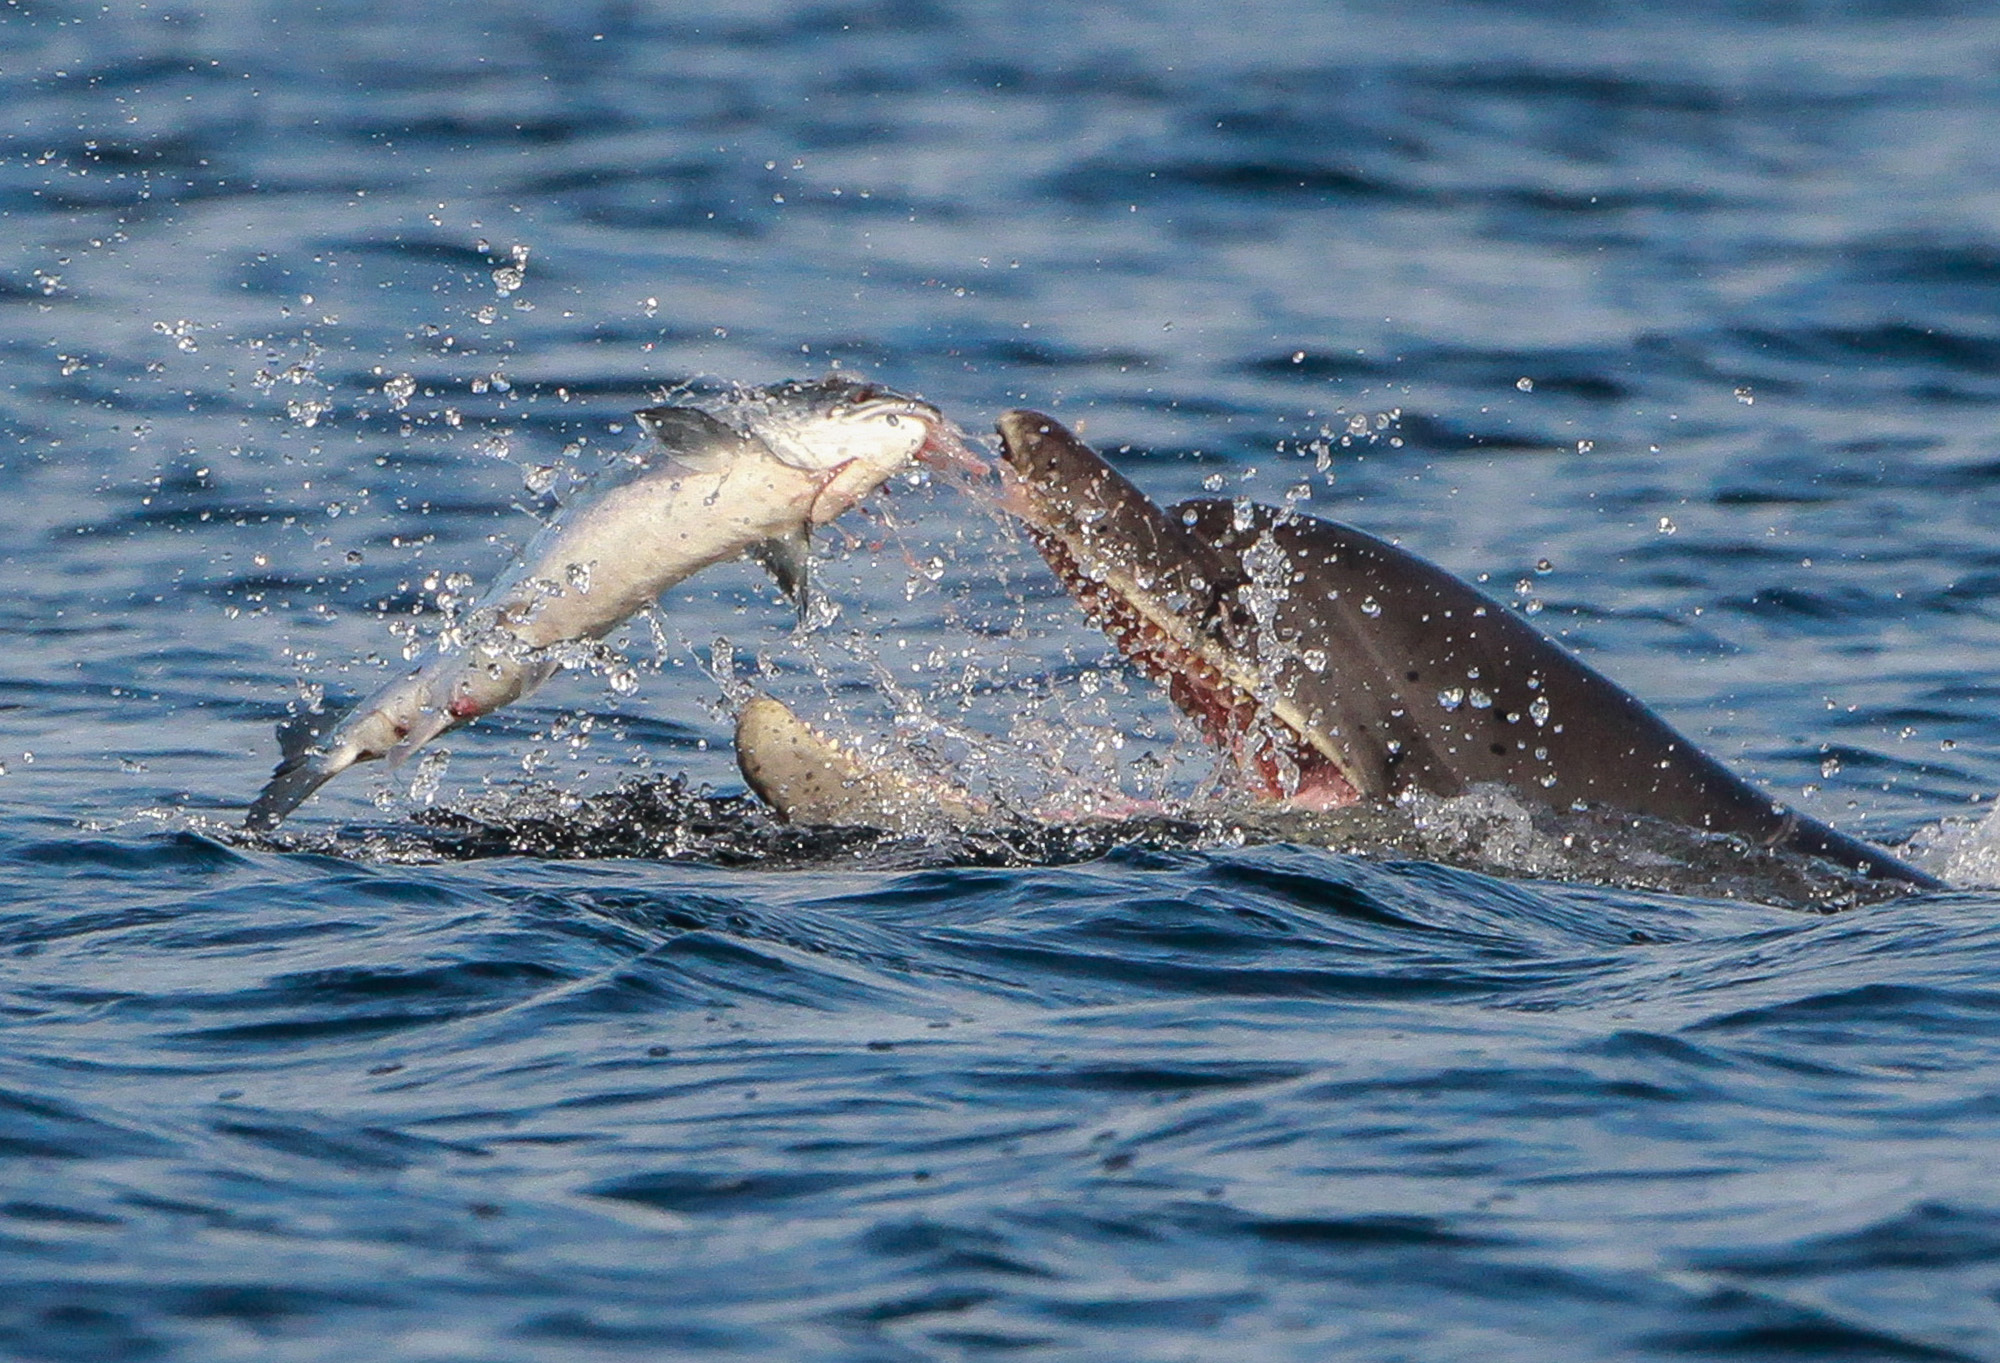 "Dolphin with Fish" by Bob Humphreys